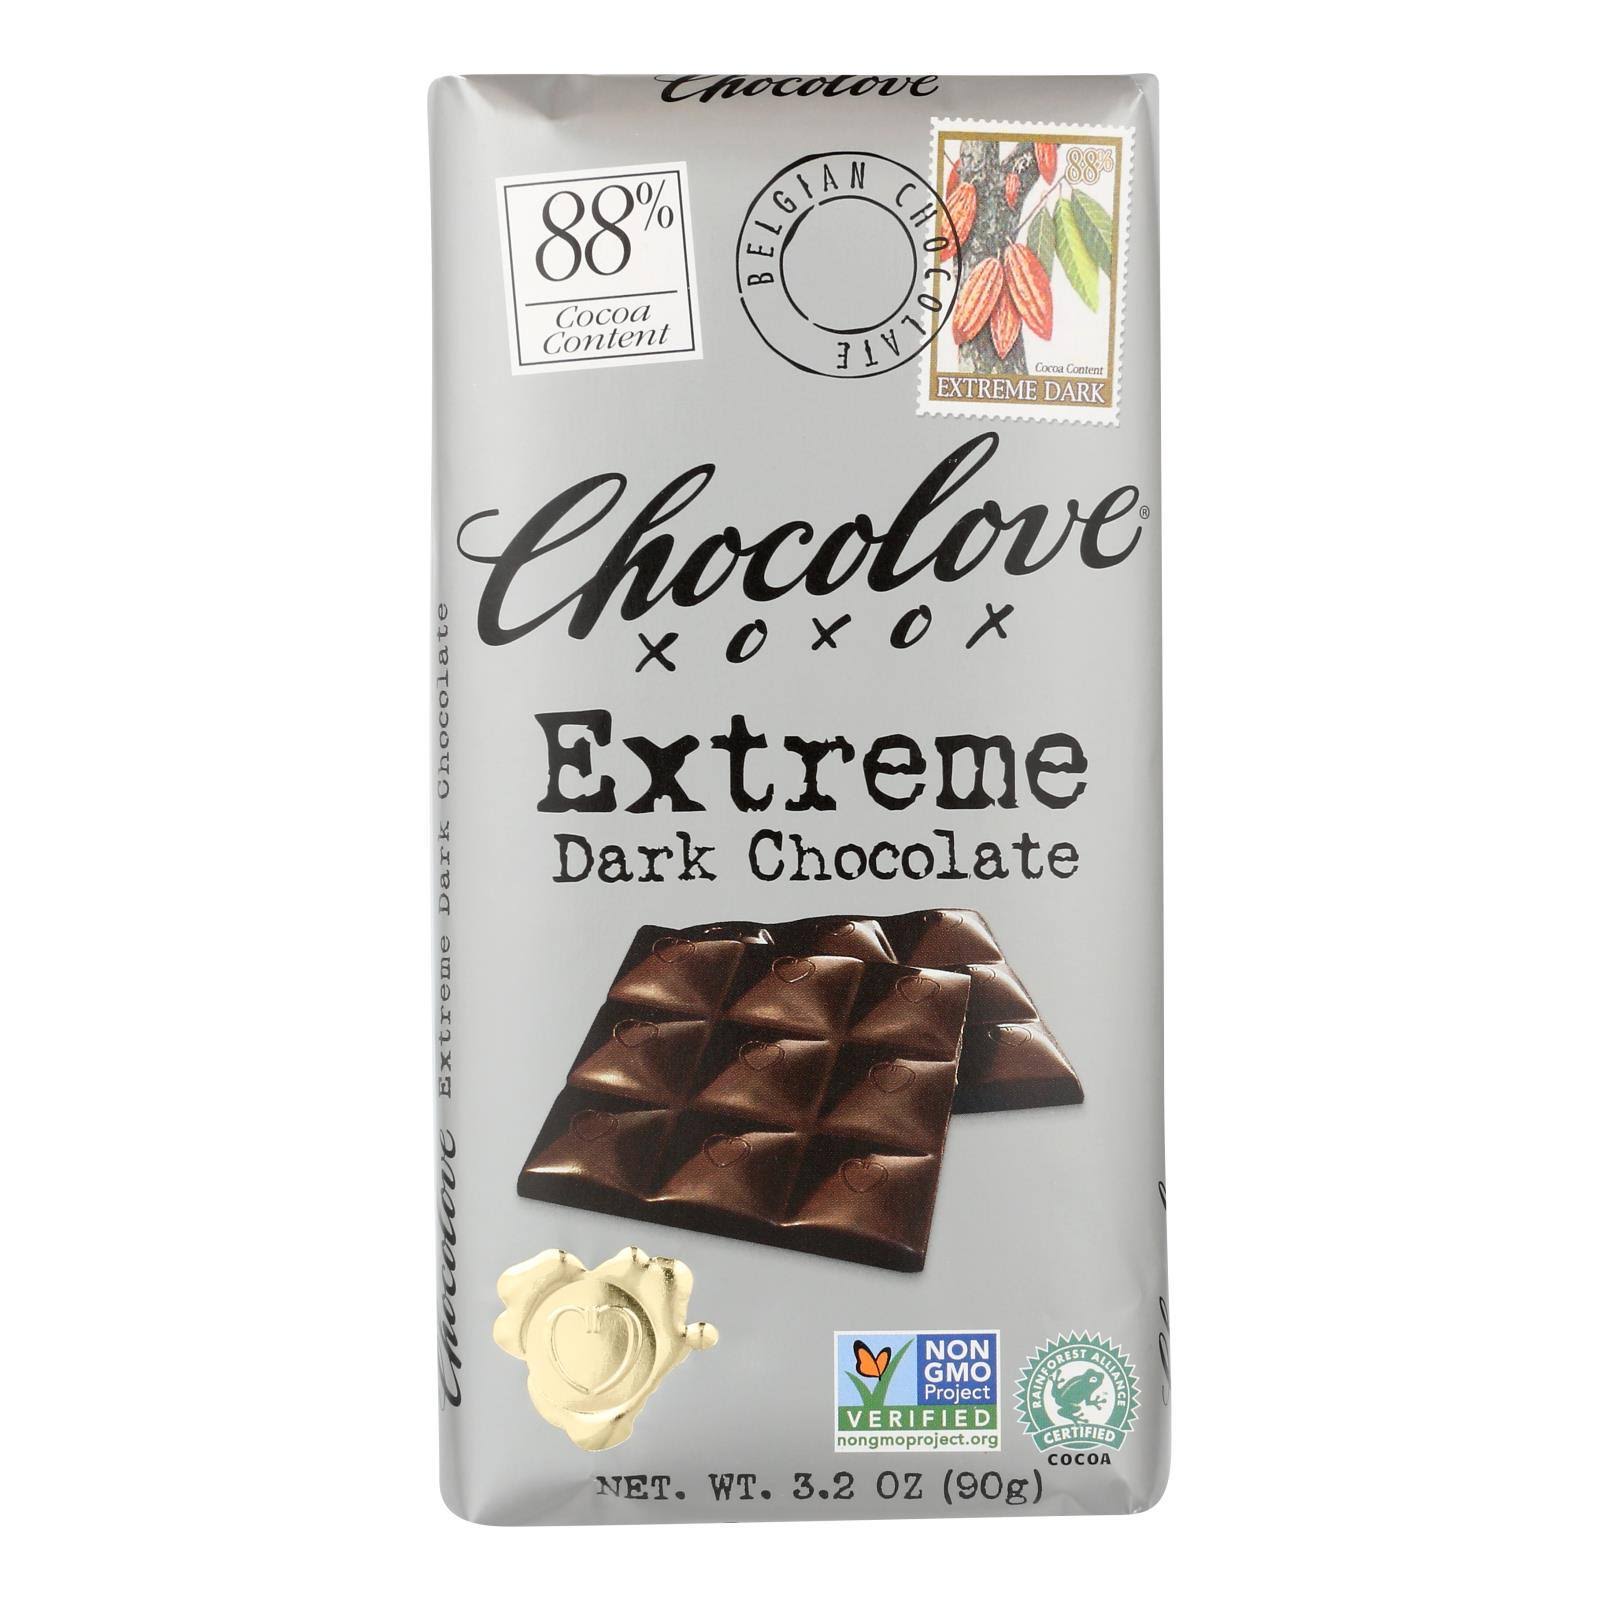 Chocolove - Dark Chocolate Bar Extreme Dark - 3.2 oz.